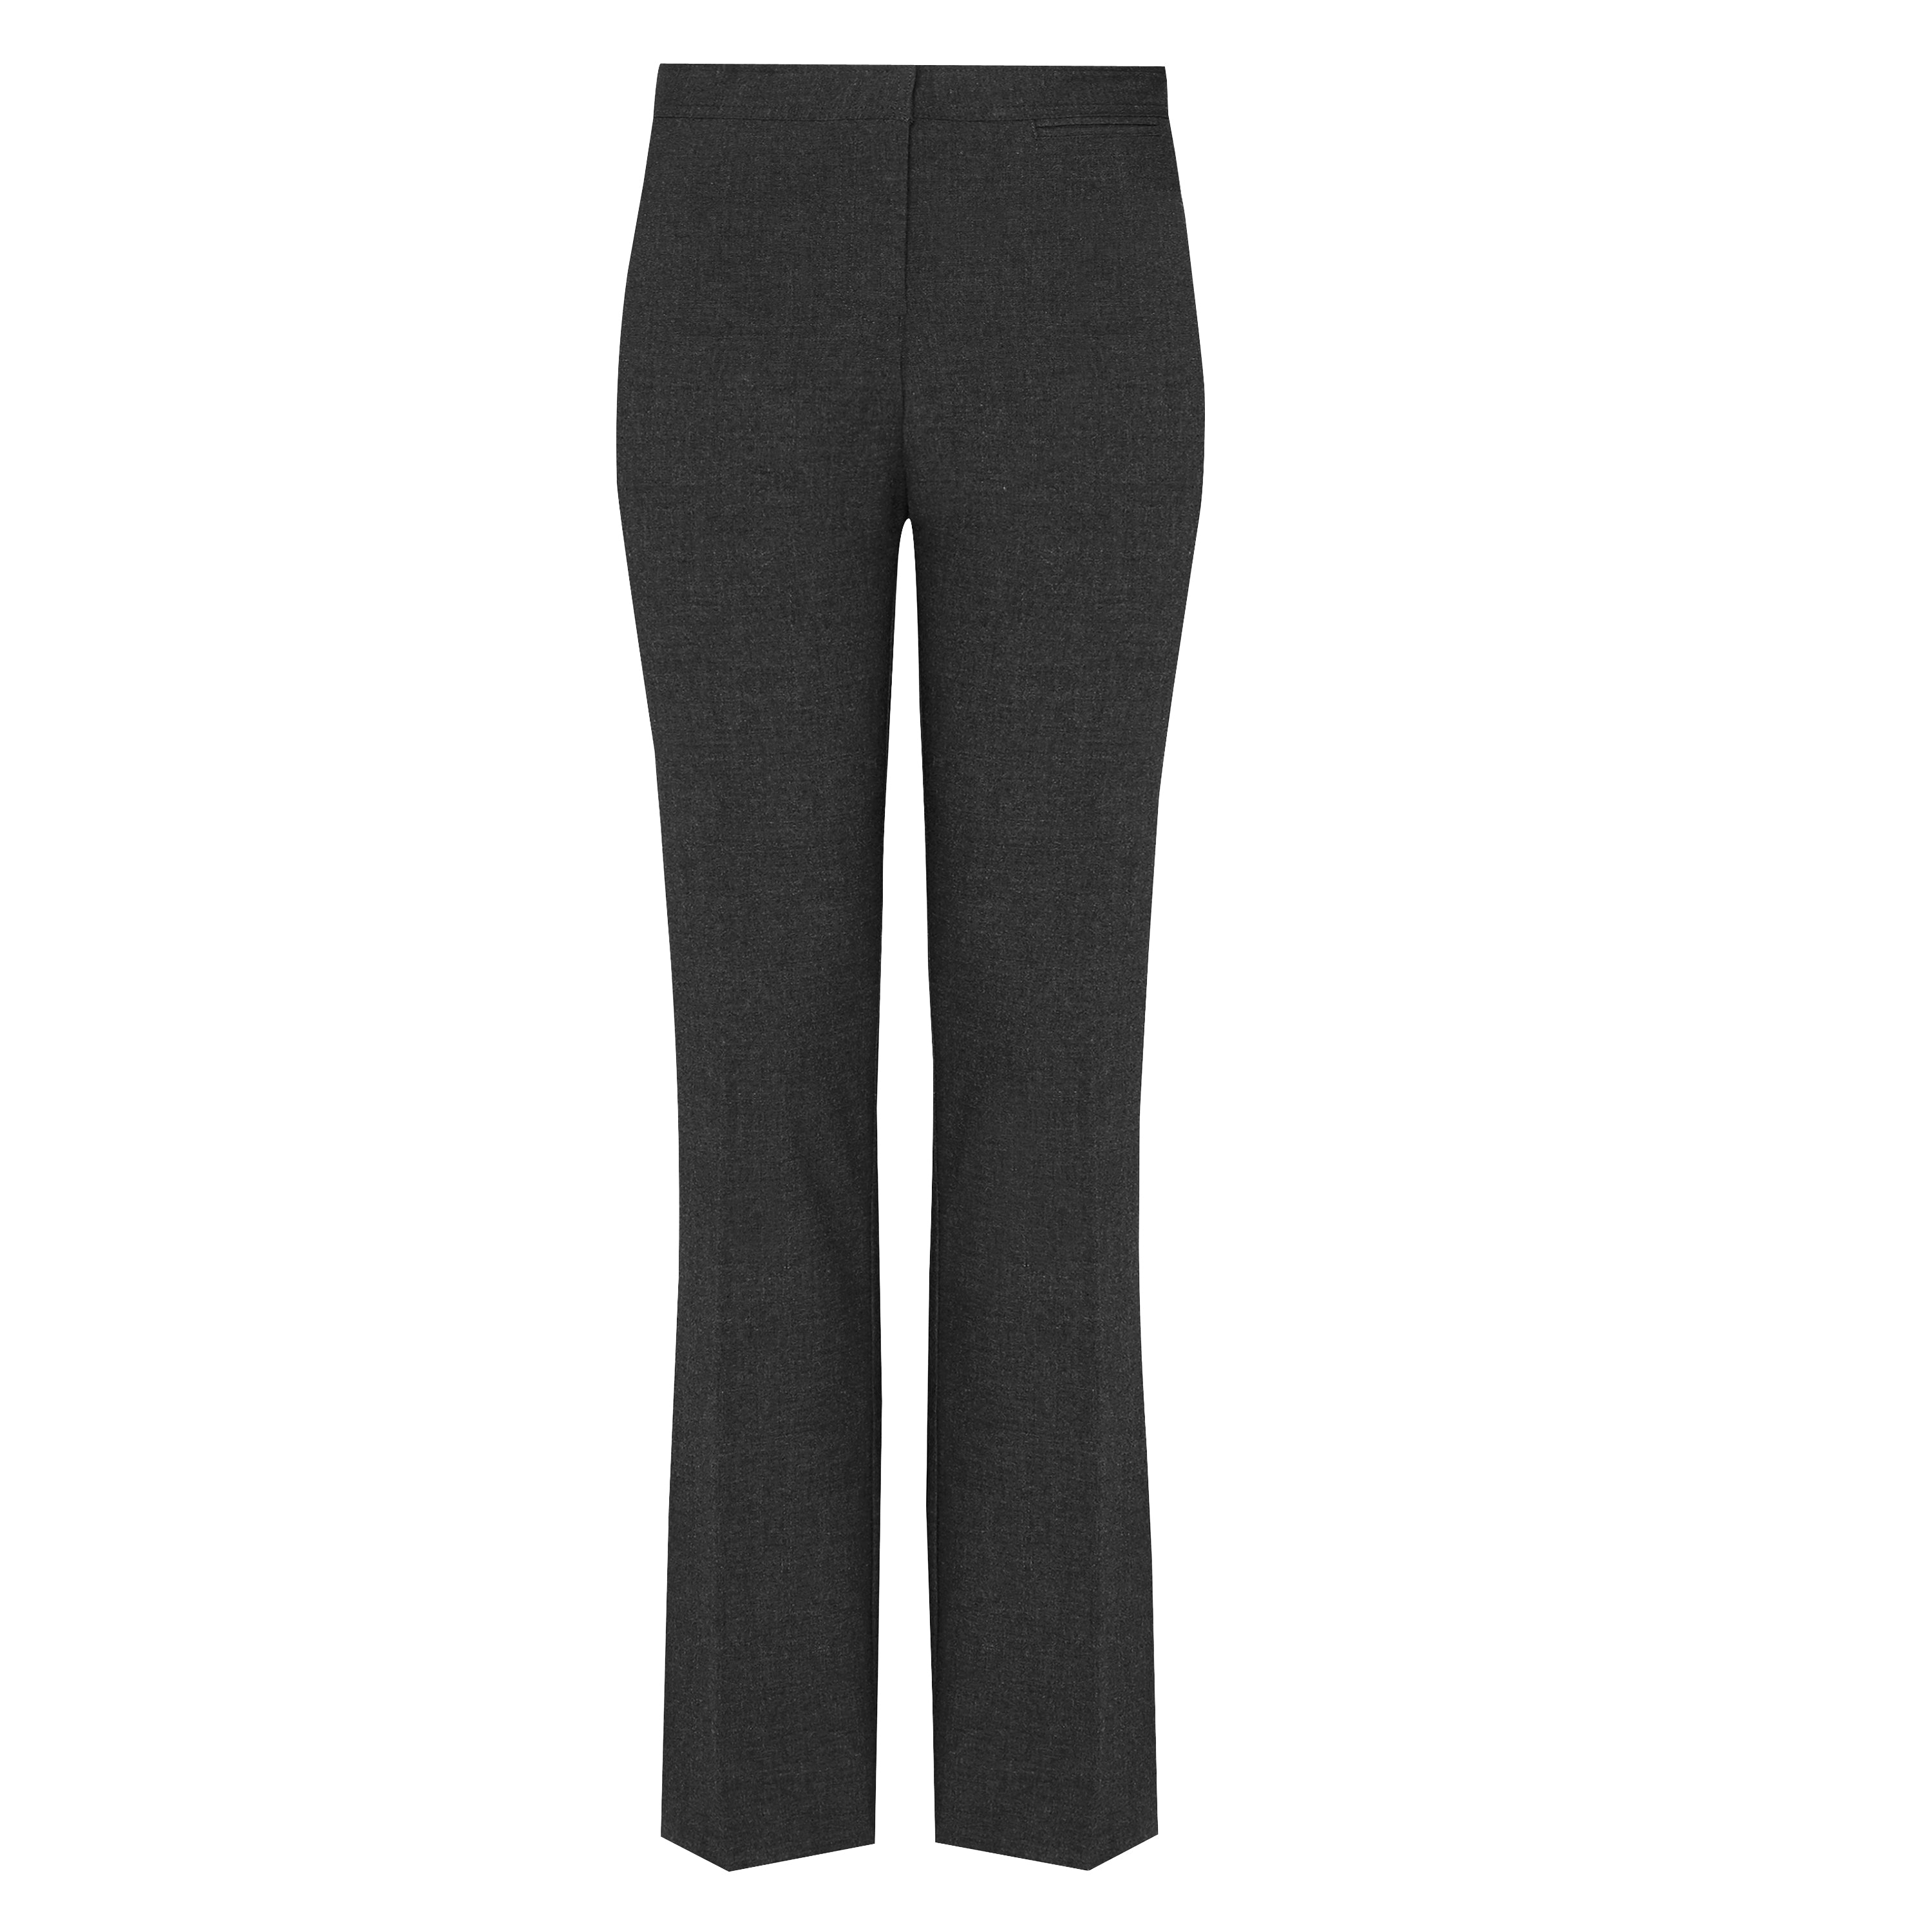 Girls skinny school trousers invisible zip Ladies Women office stretch black  blu | eBay